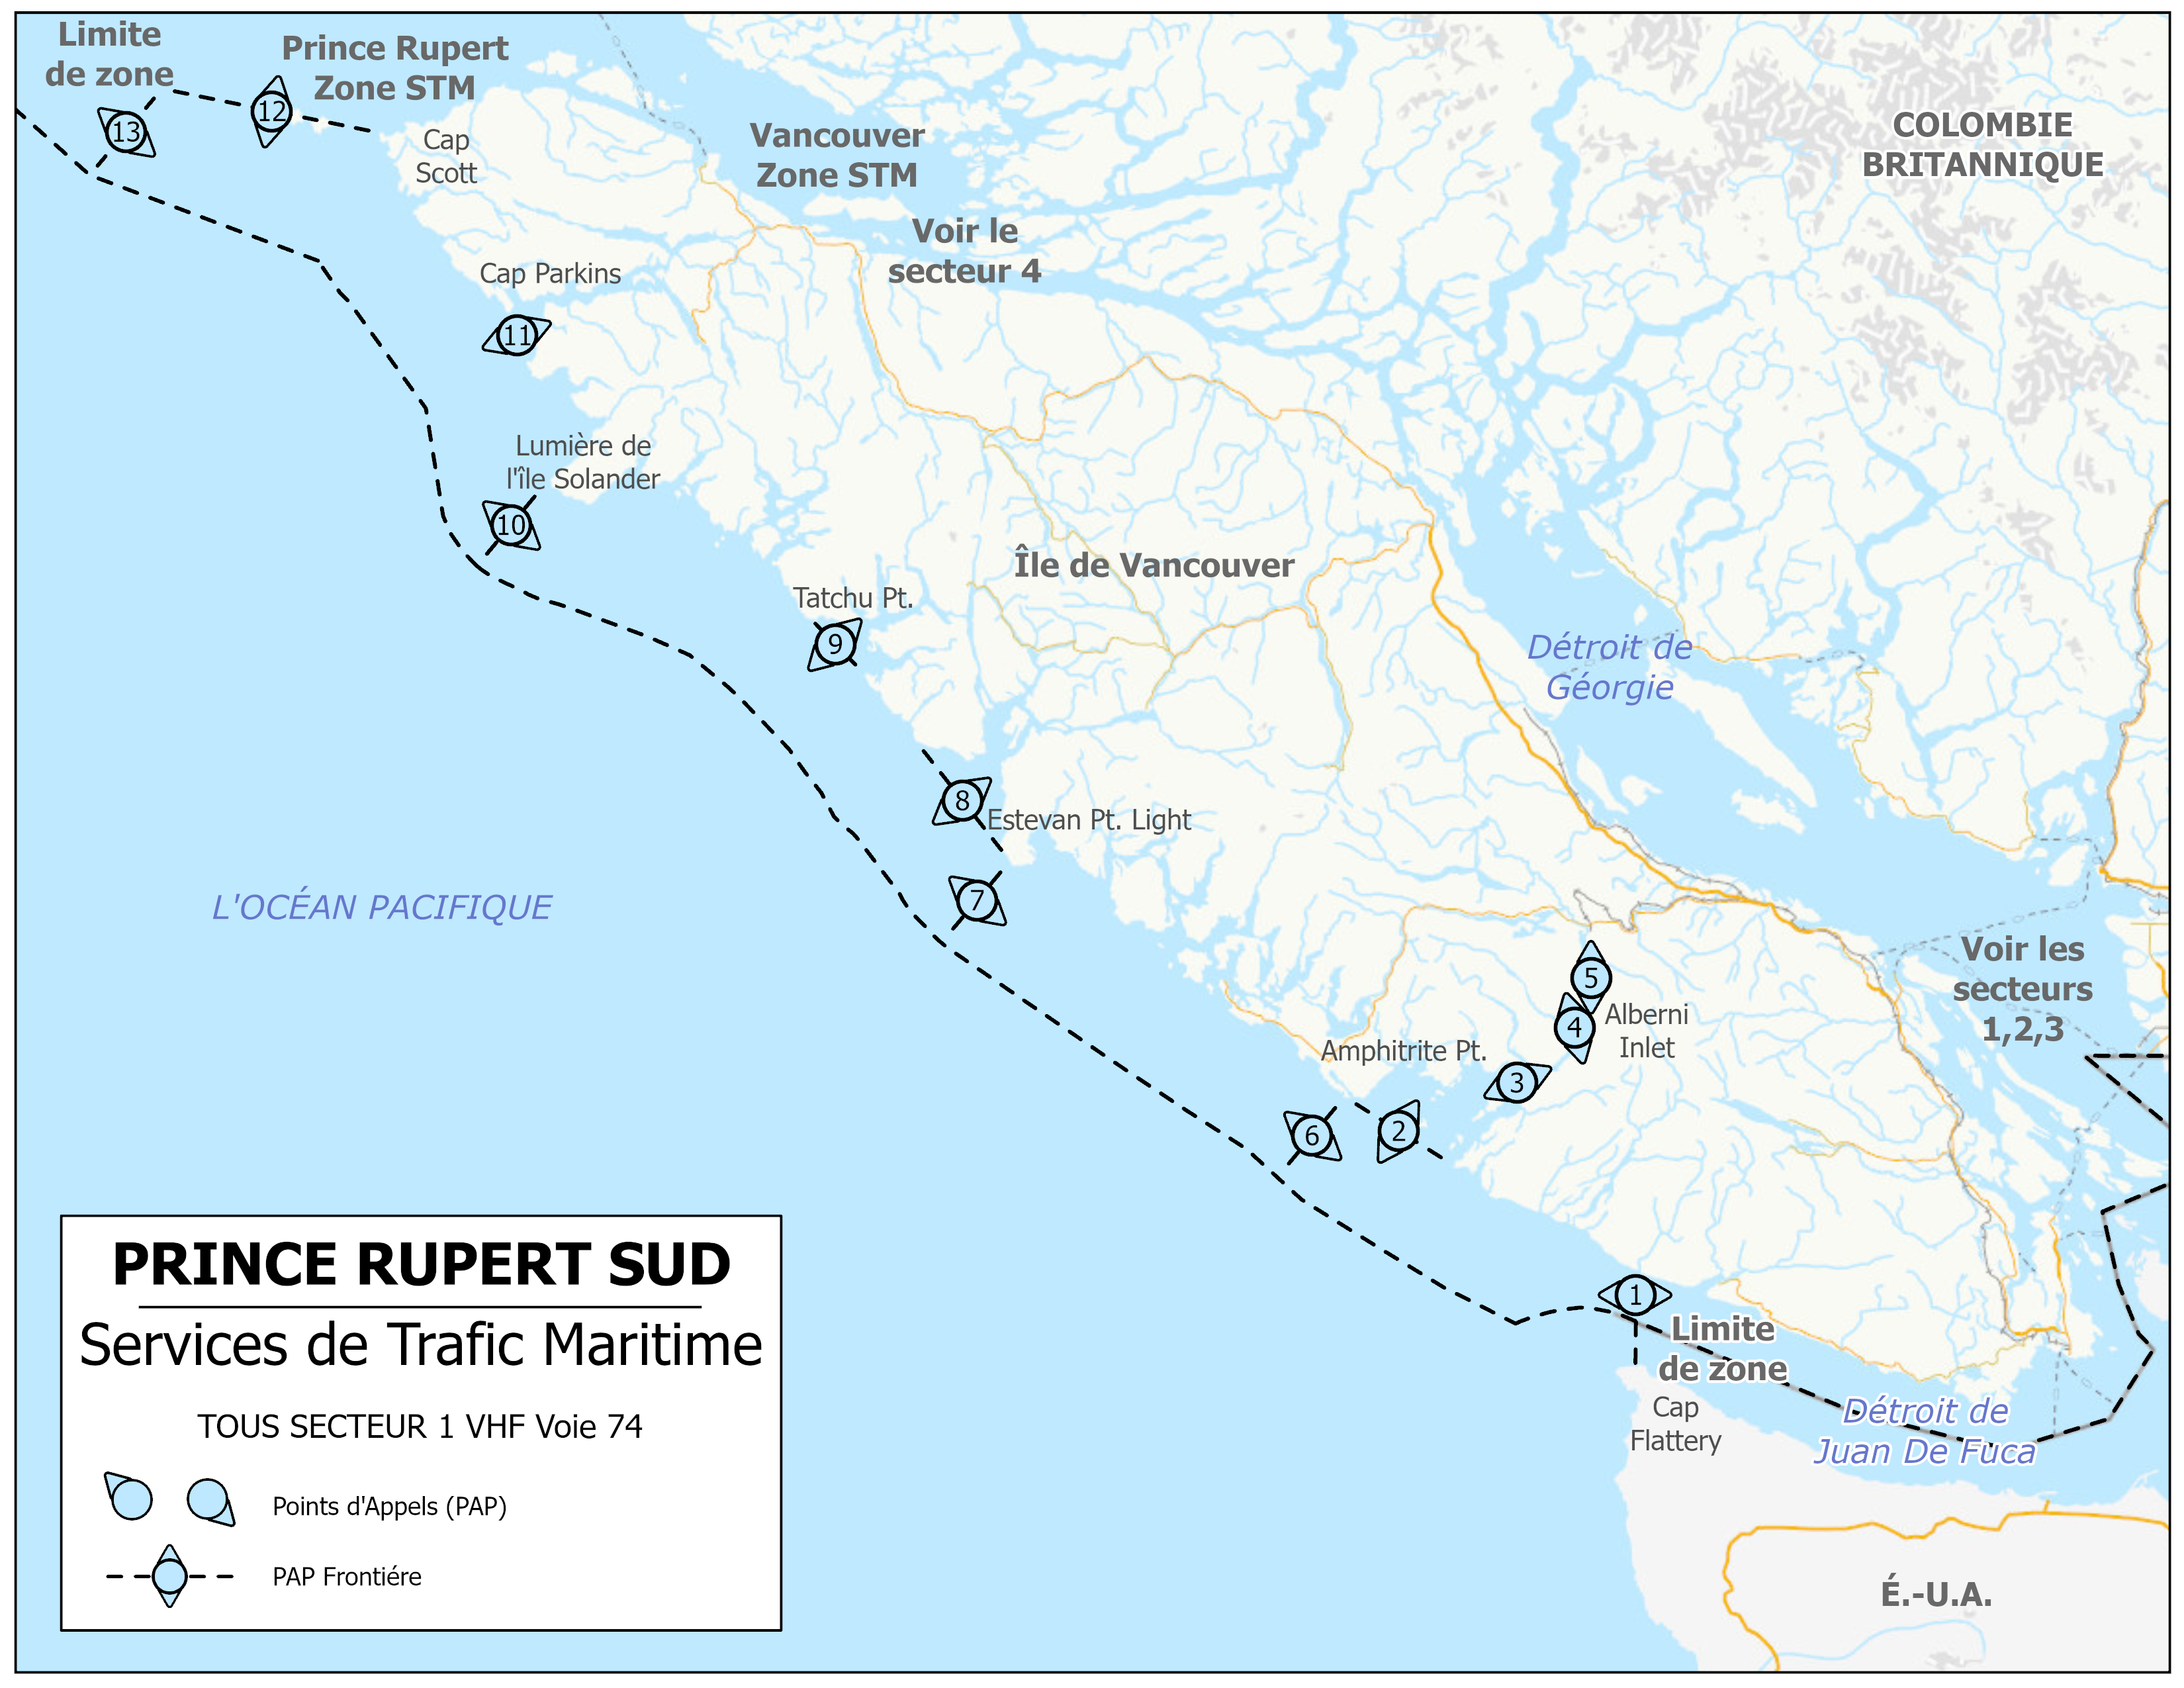 Service du trafic maritime - Prince Rupert - Sud - Secteur 1